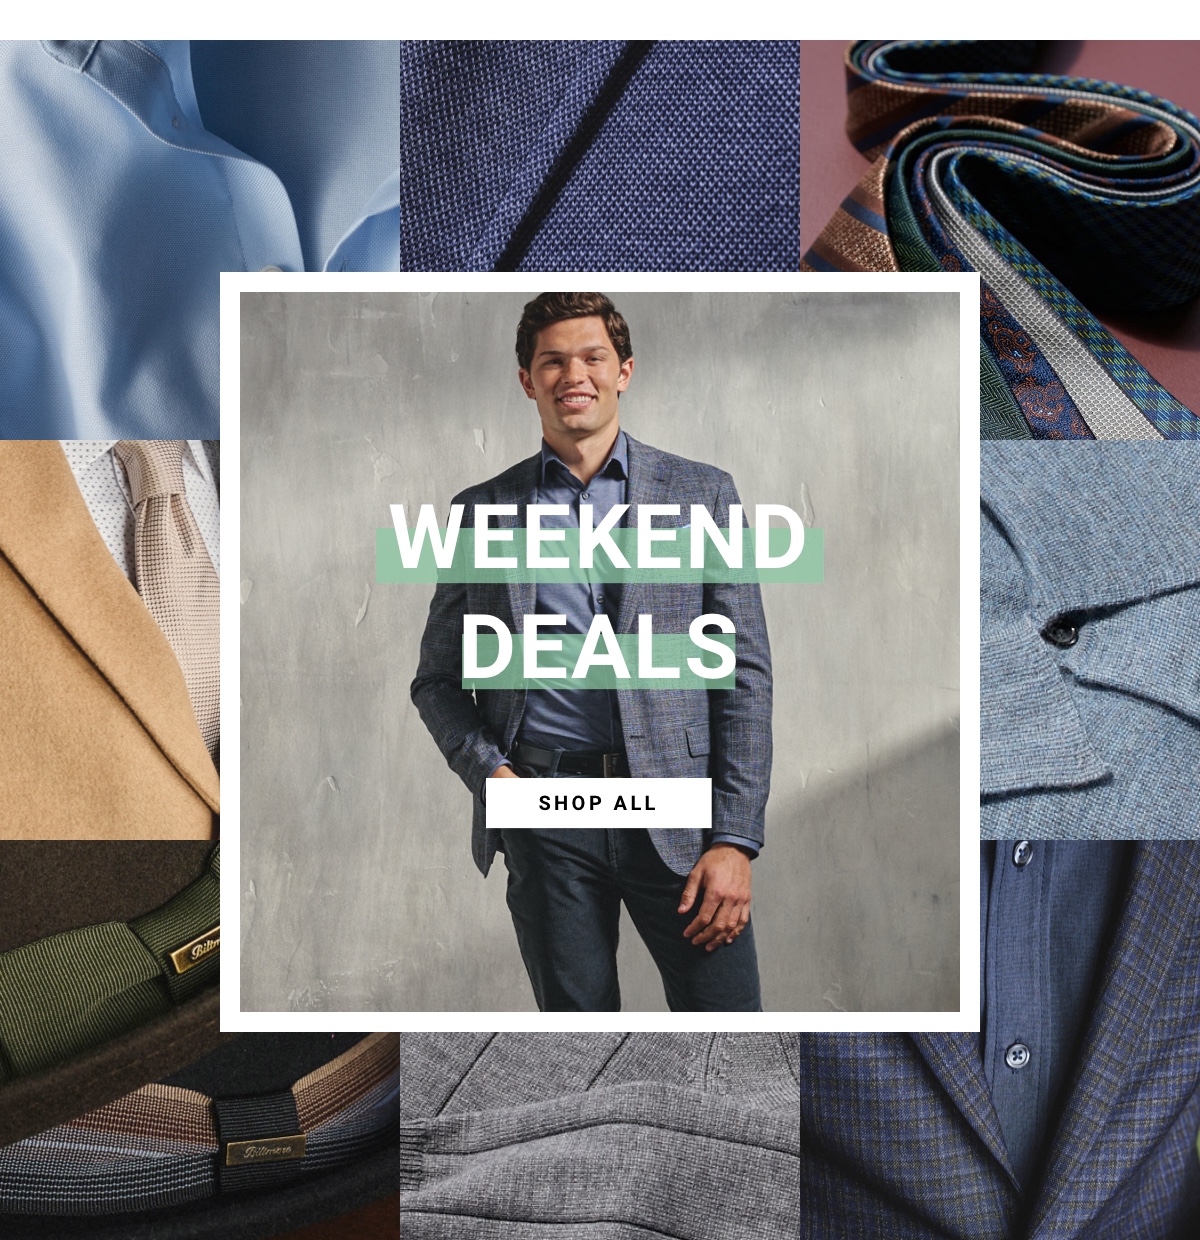 Weekend Deals Shop All See terms below. 